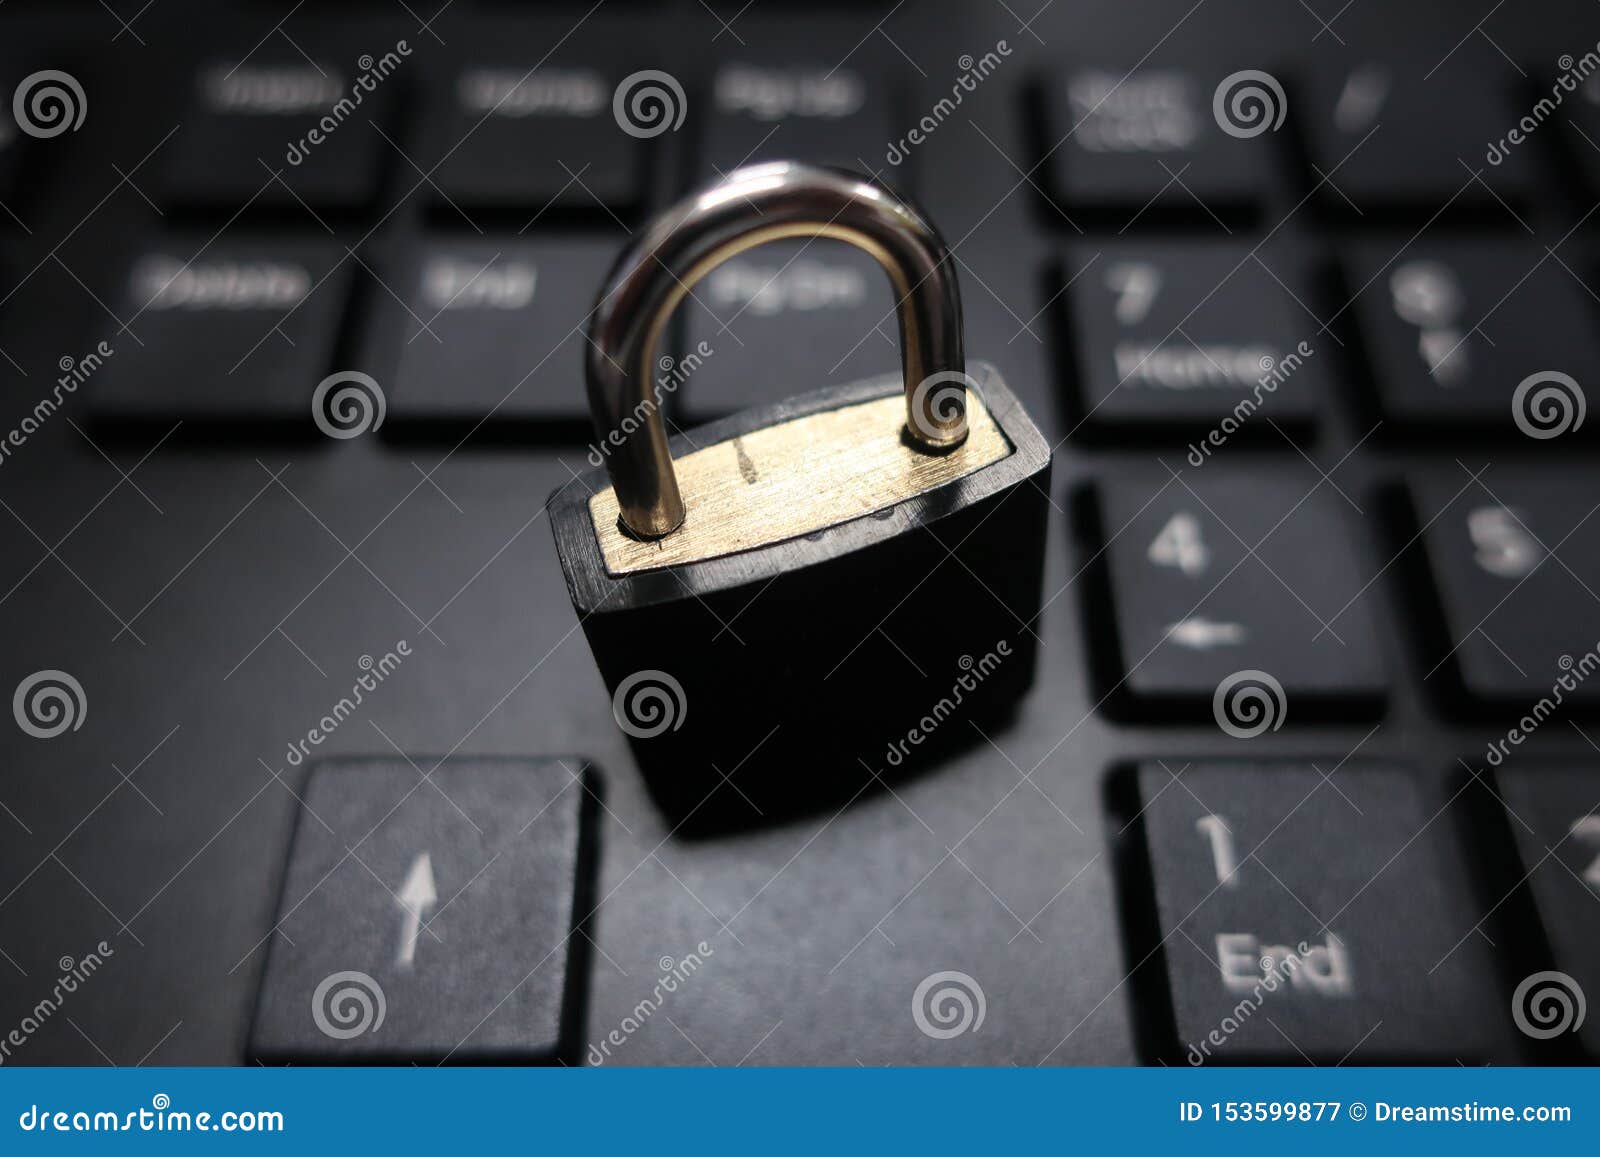 security closed cadena on a black computer keyboard